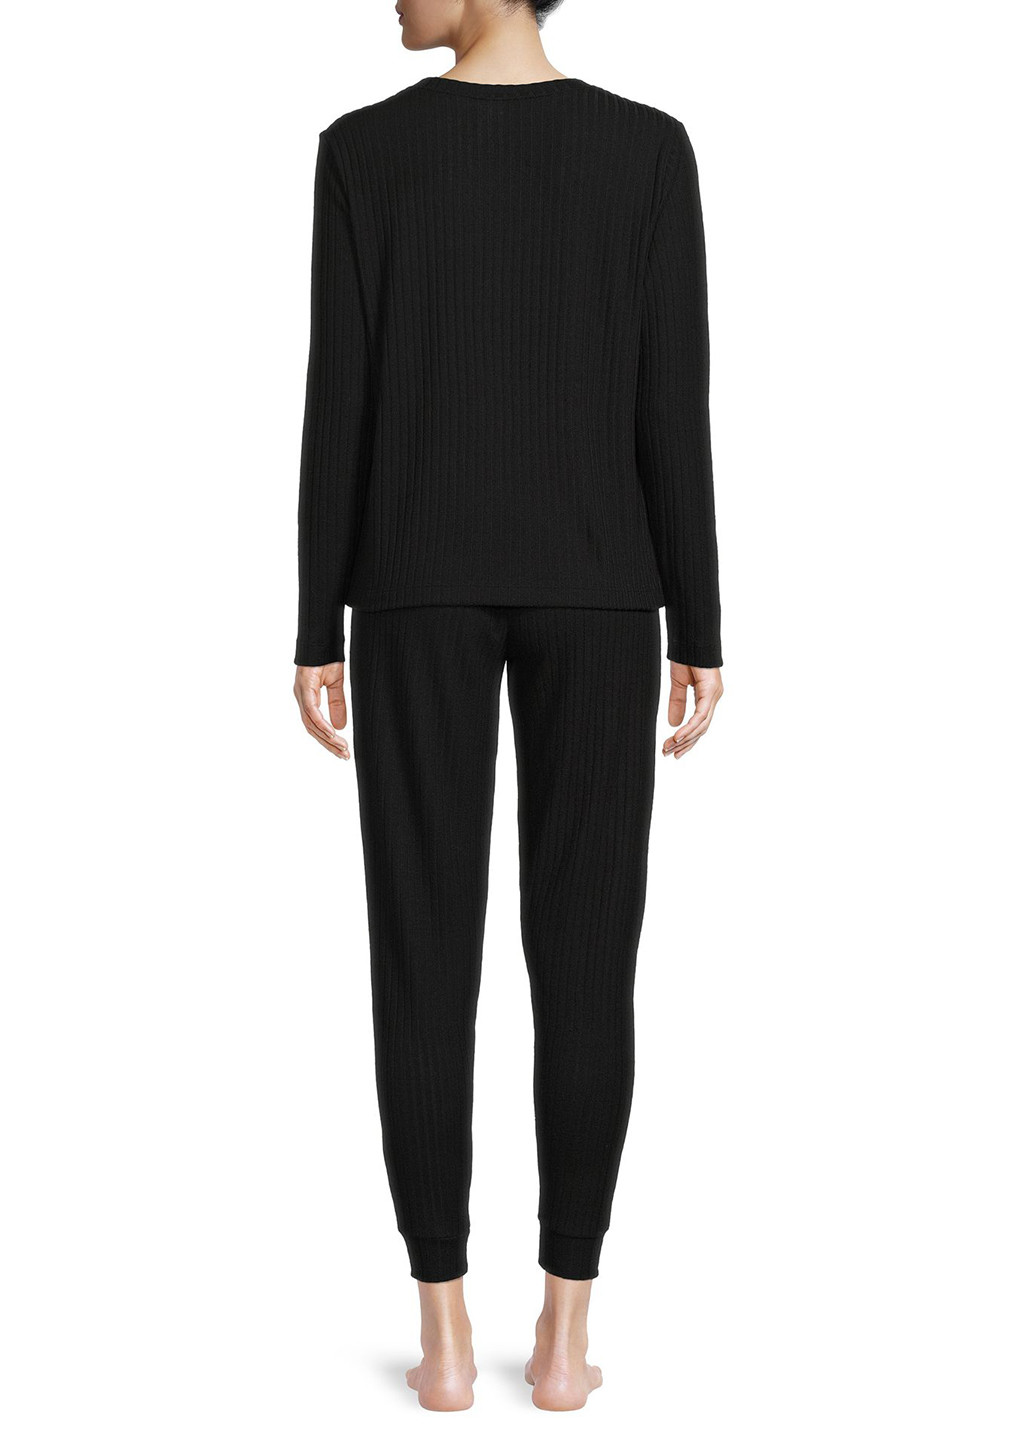 Черная всесезон пижама (лонгслив, брюки) лонгслив + брюки Calvin Klein